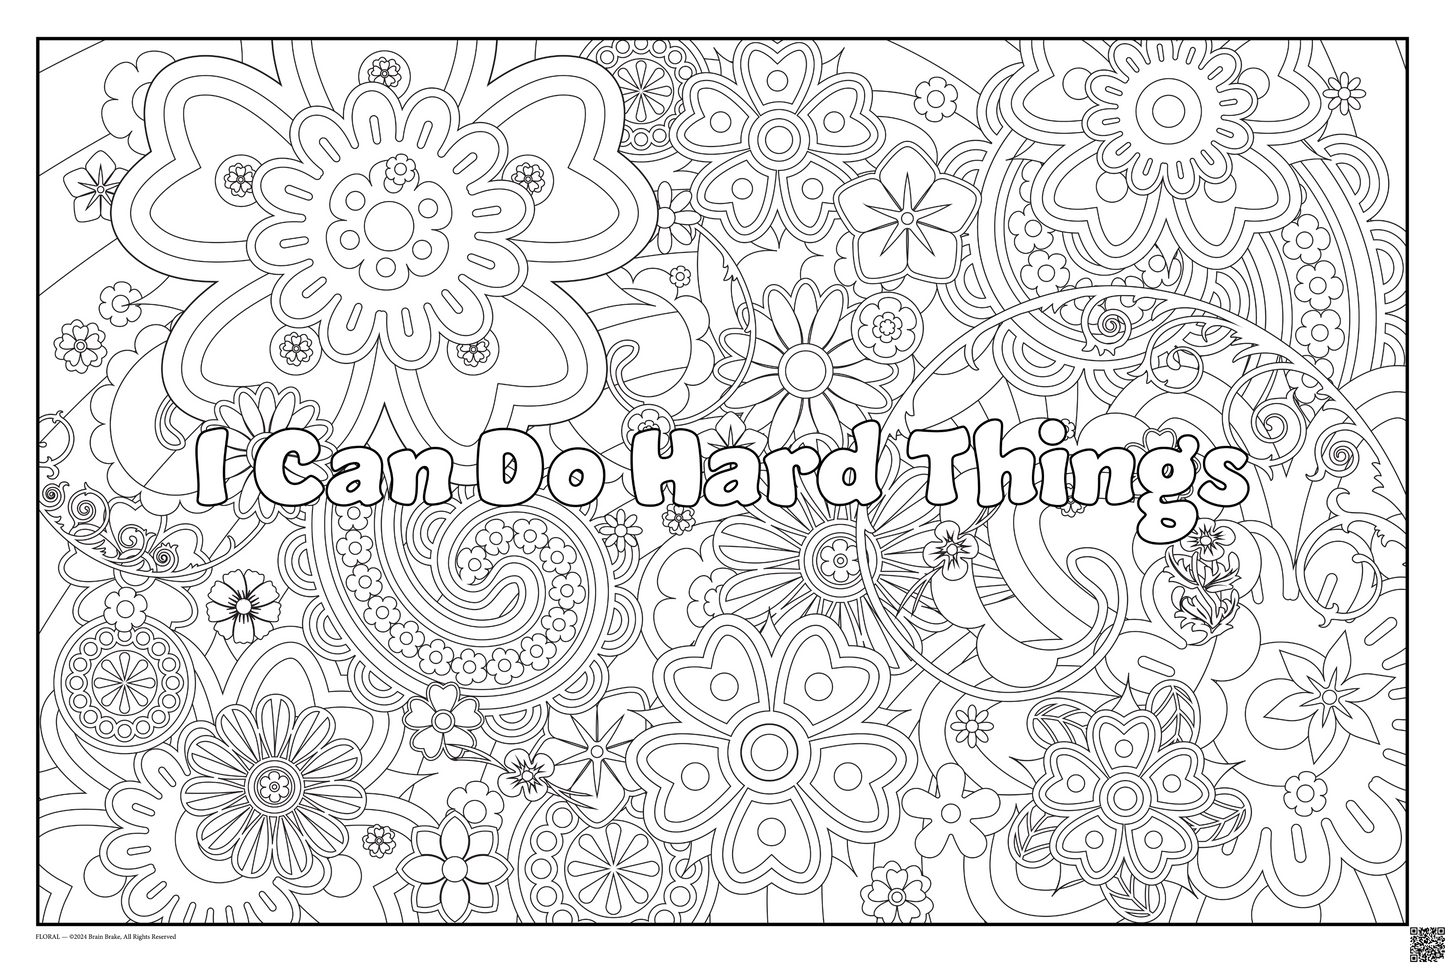 Calming Corner: I Can Do Hard Things